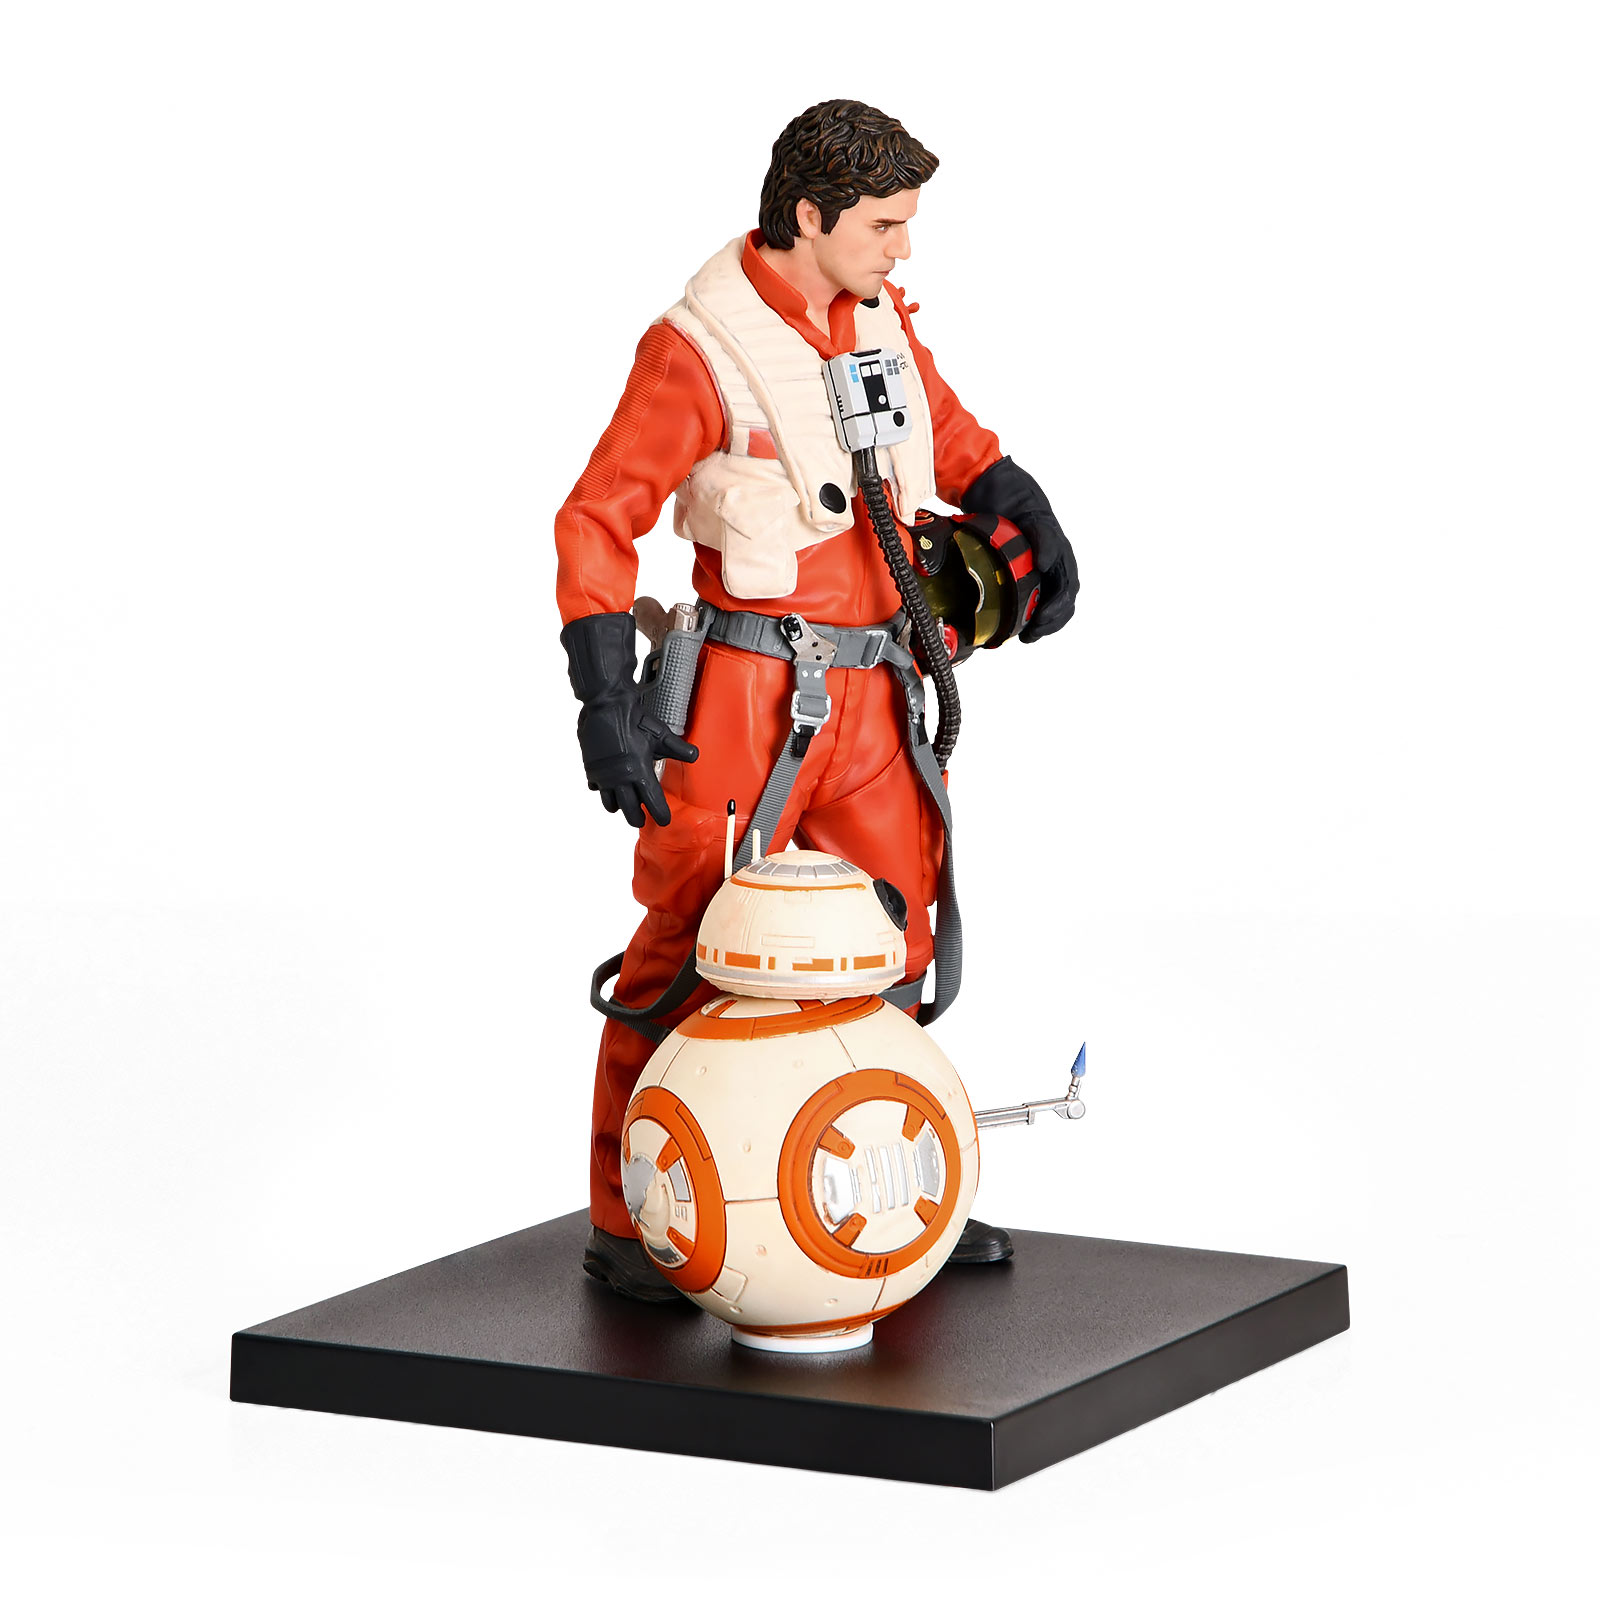 Star Wars - Poe Dameron & BB-8 Figure Set